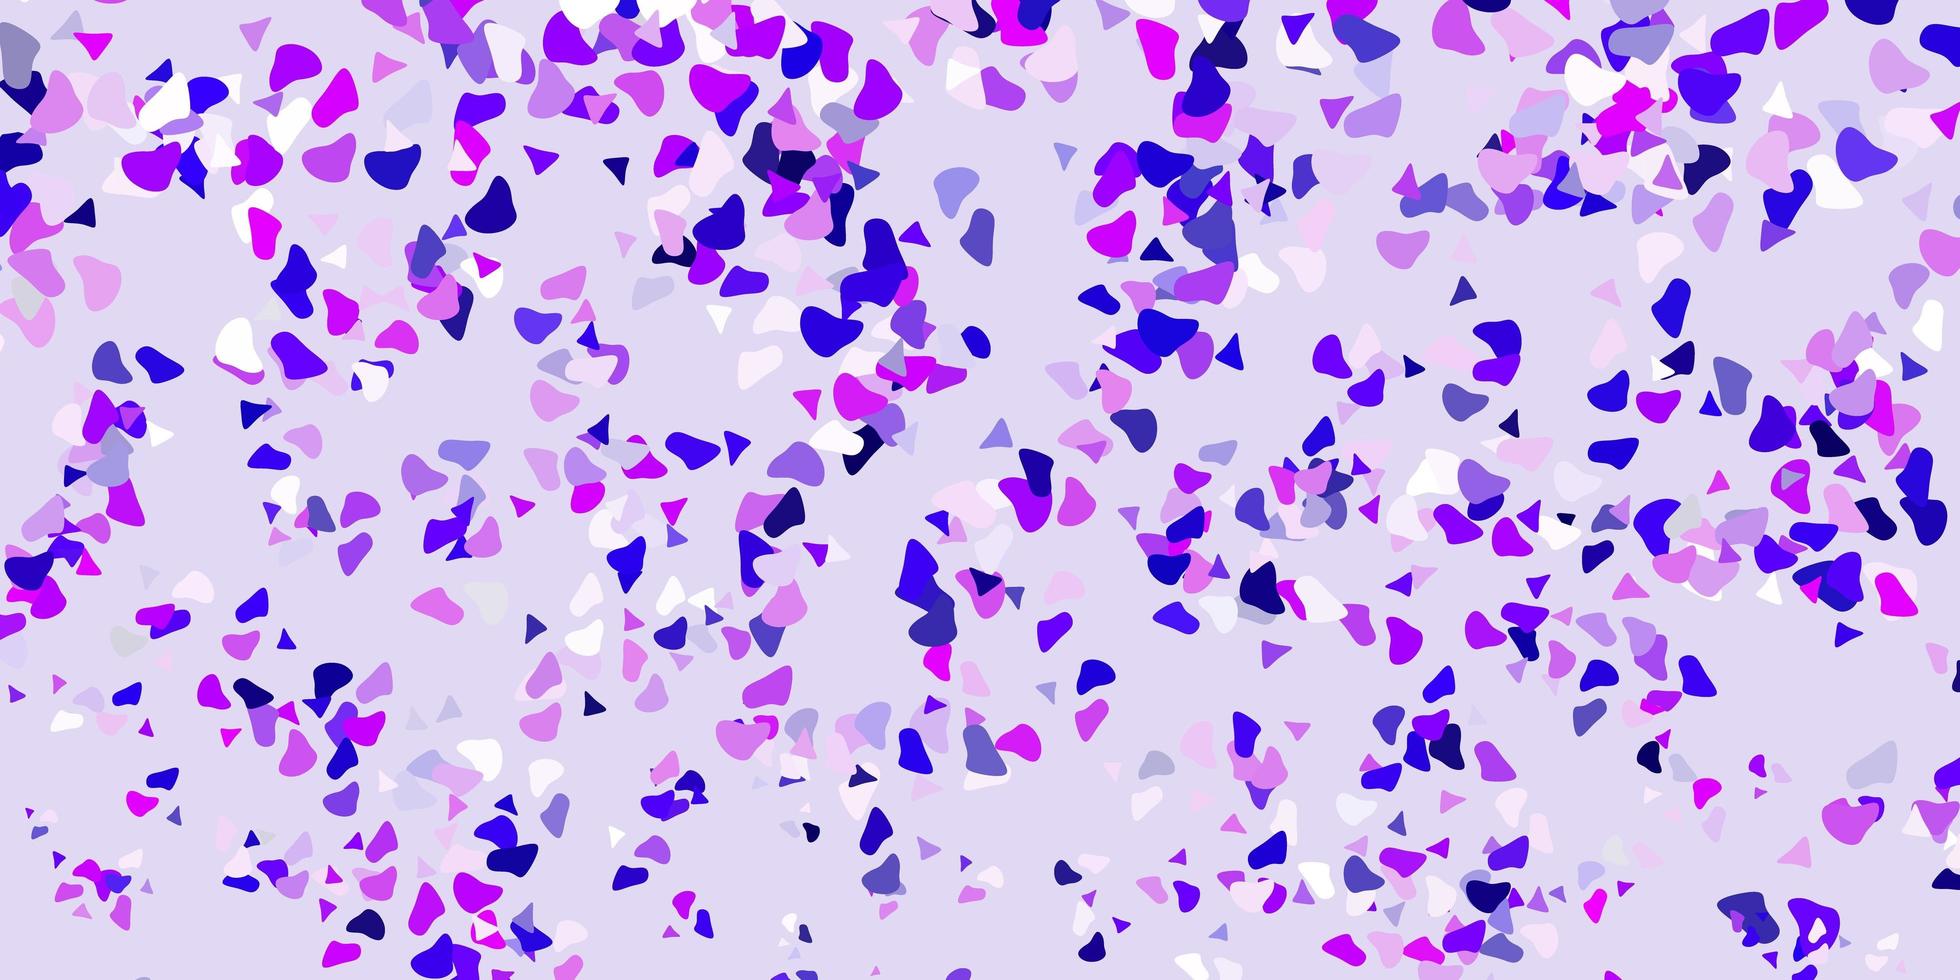 textura de vector violeta claro, rosa con formas de memphis.